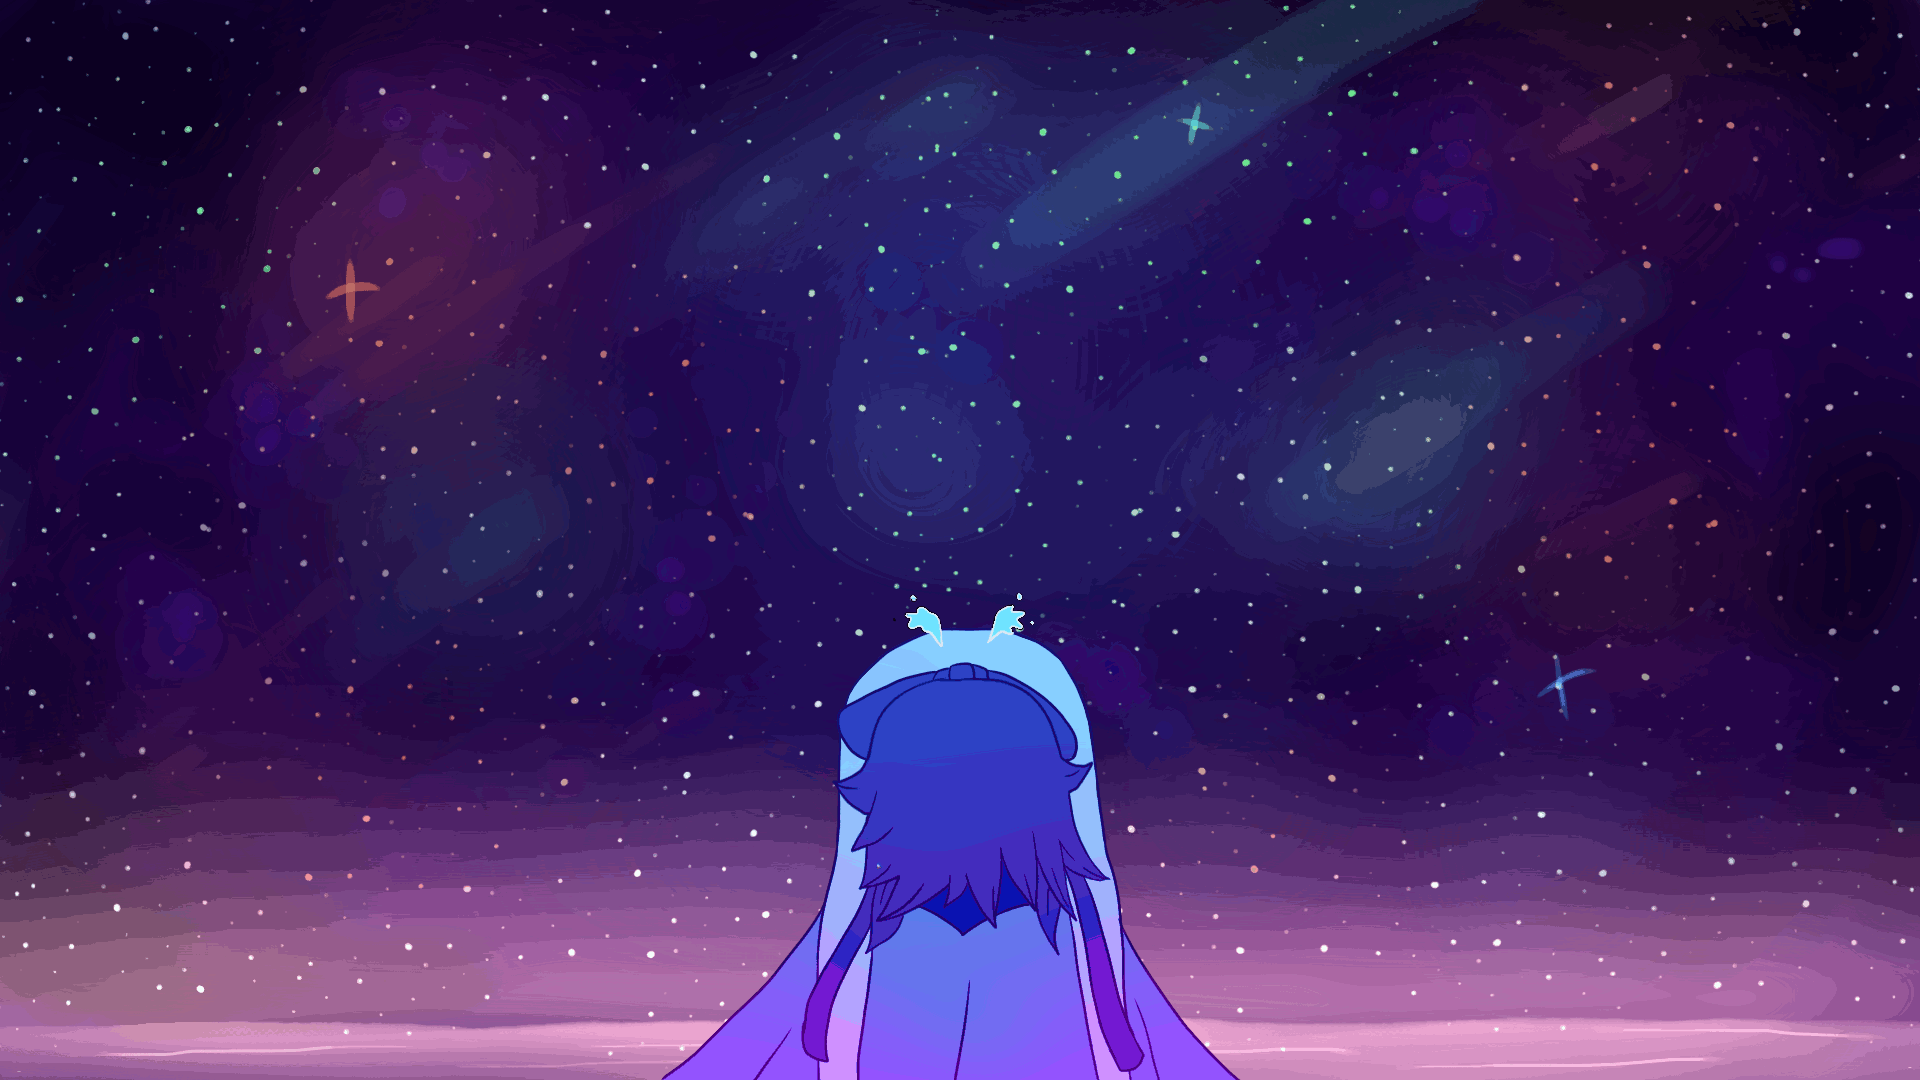 Animation) Steven Universe - Lapis Lazuli by Seerfree on DeviantArt